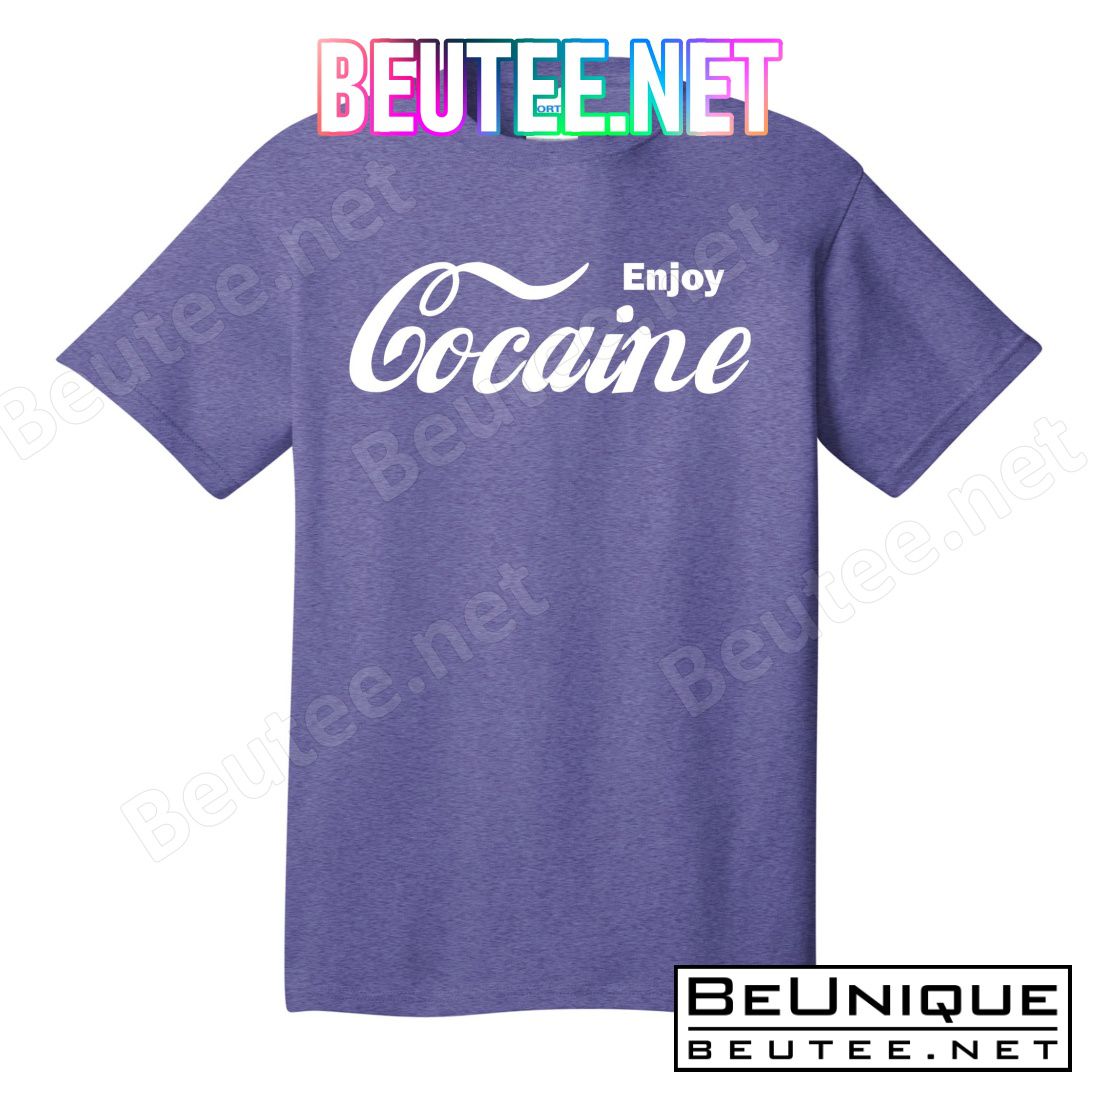 Enjoy Cocaine T-Shirts